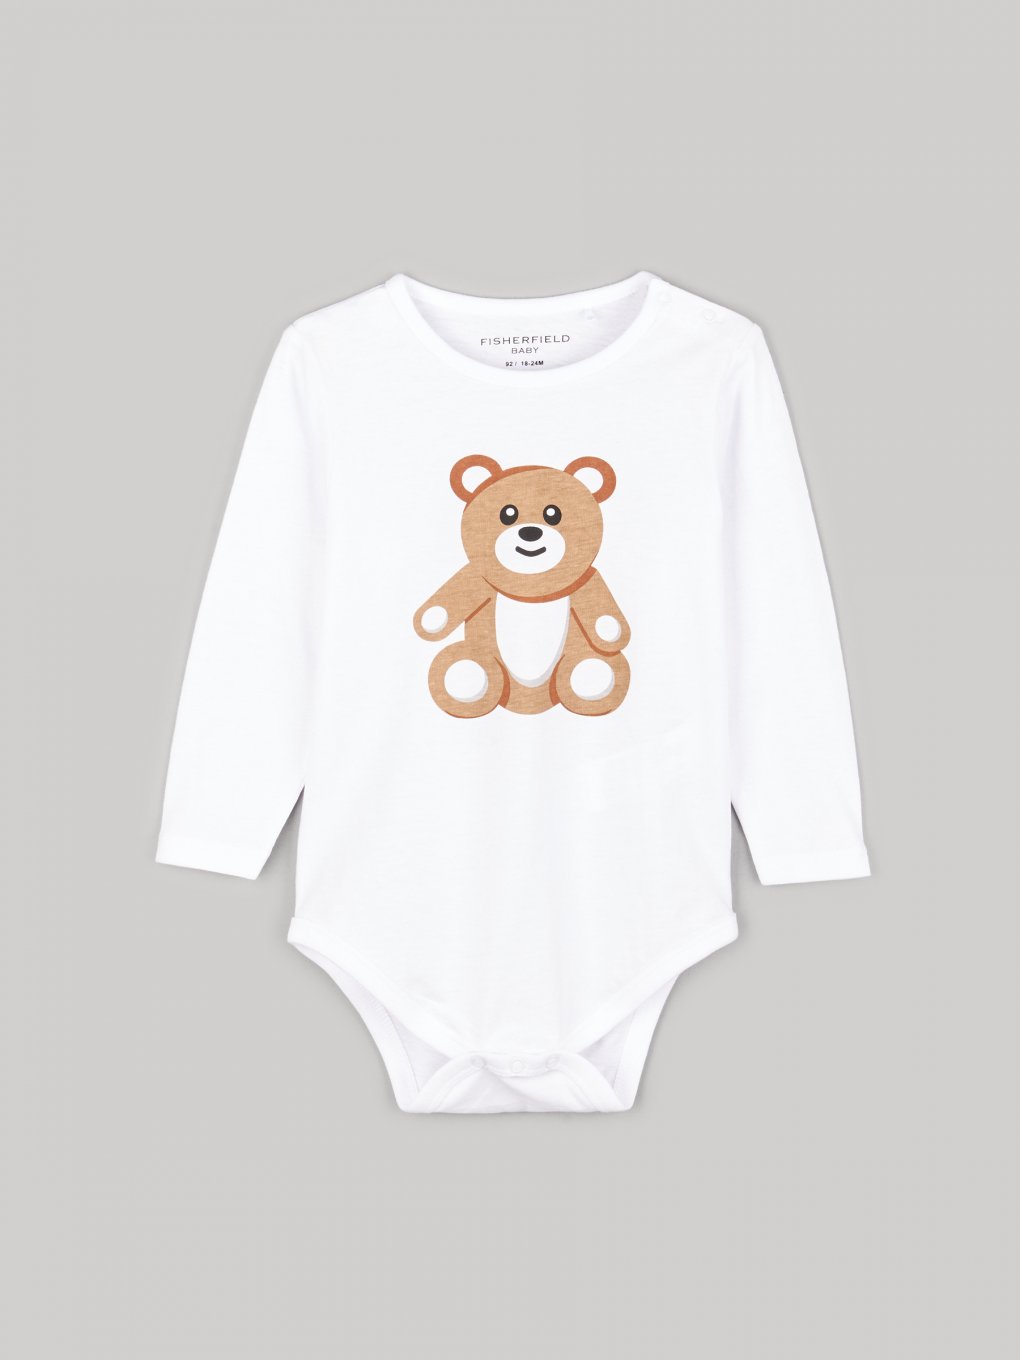 Cotton baby bodysuit with teddy print